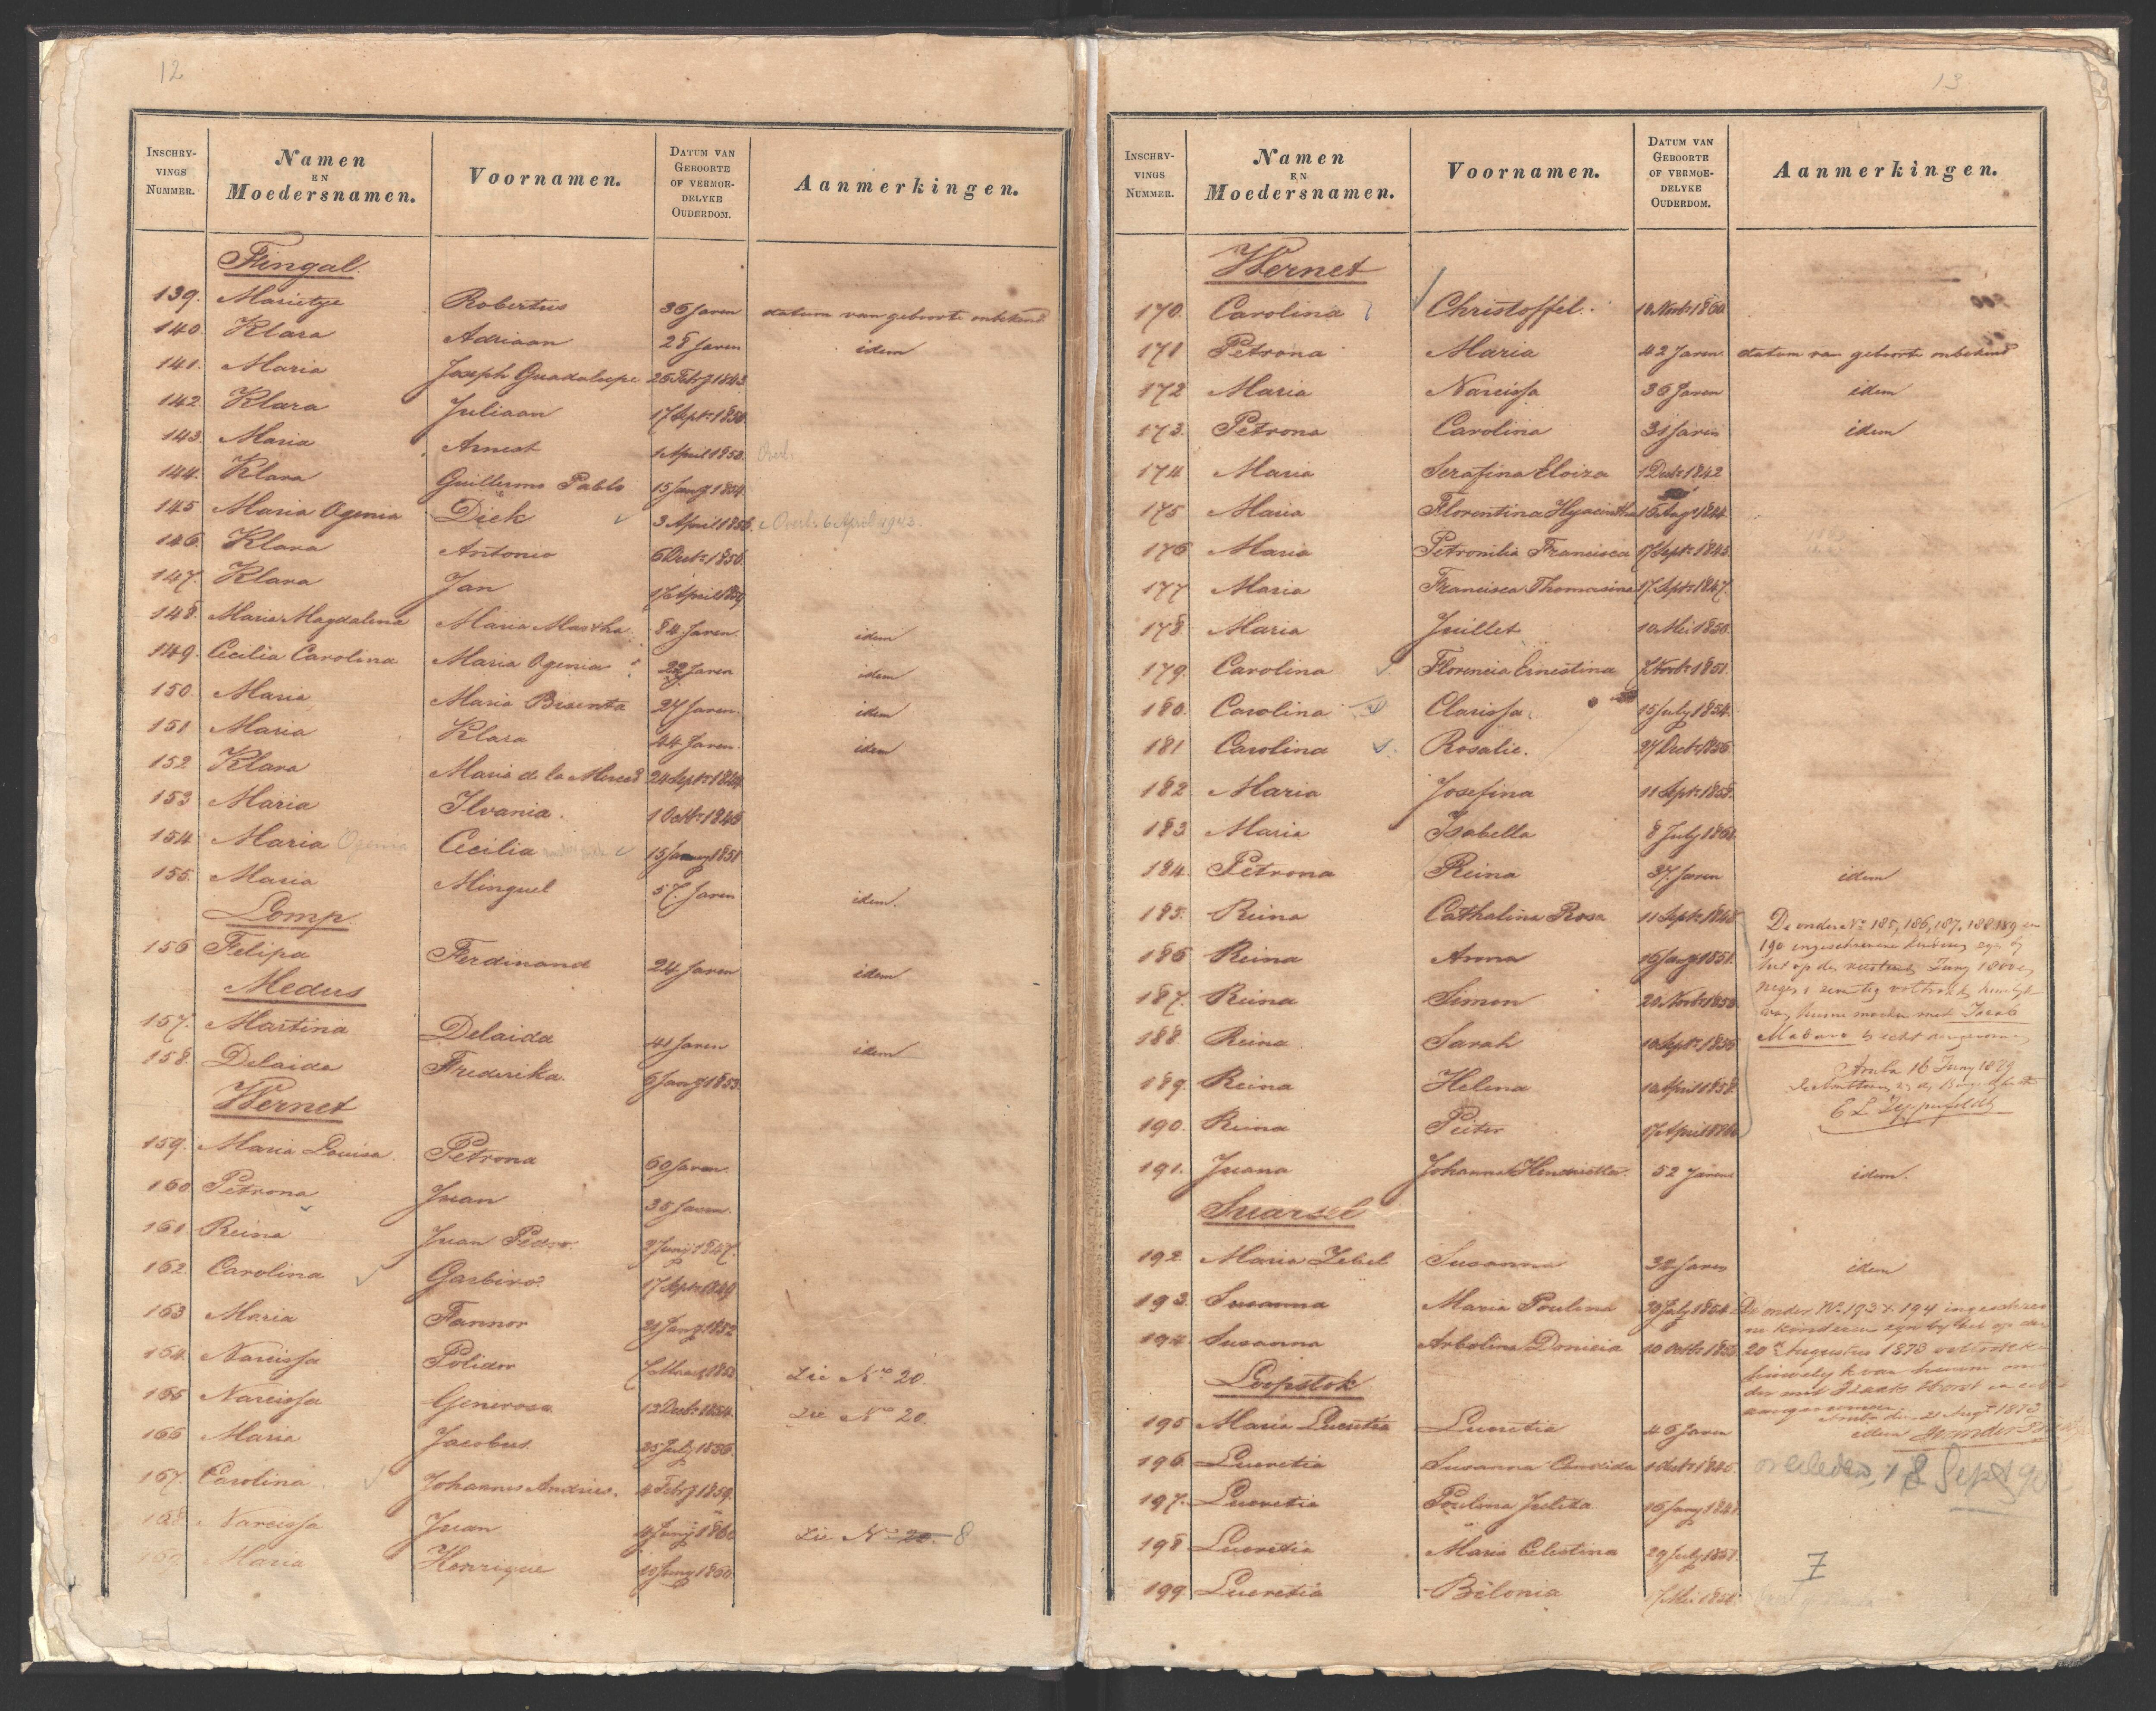 Emancipatieregister Aruba, 1863 (Koloniaal Archief, inv.nr. 842, Archivo Nacional Aruba)